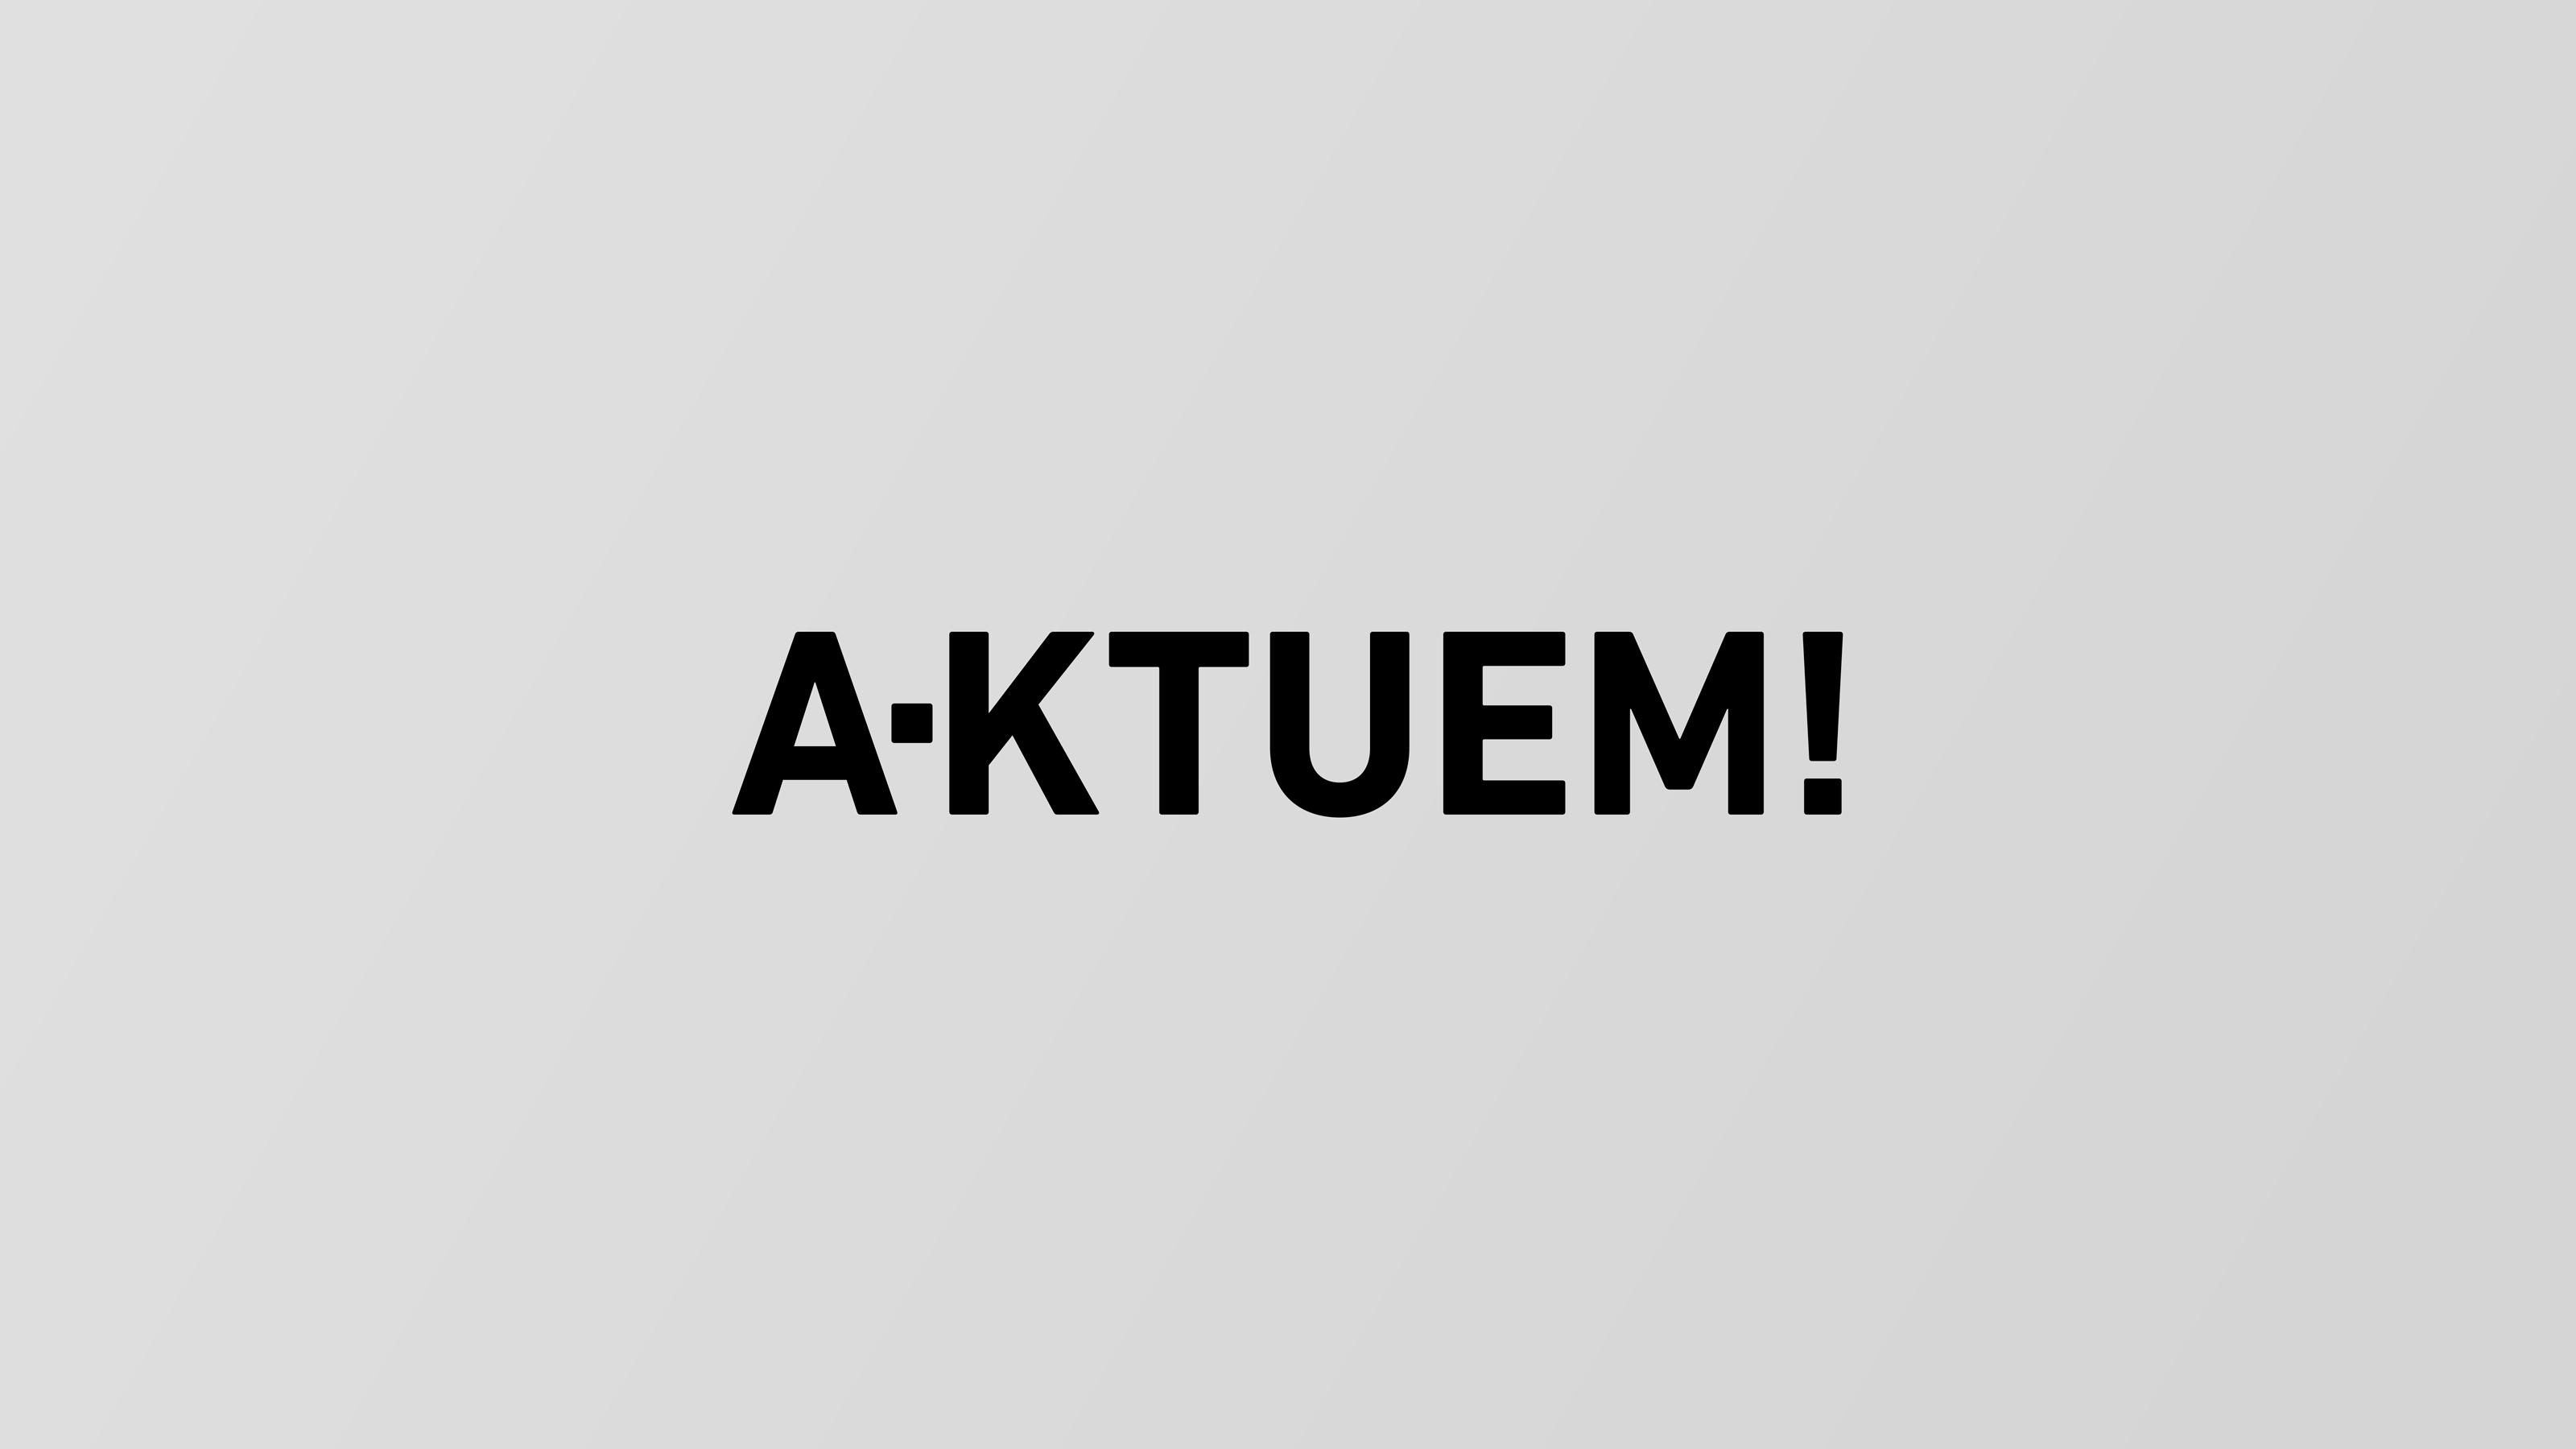 Aktuem! by Alucina - Creative Work